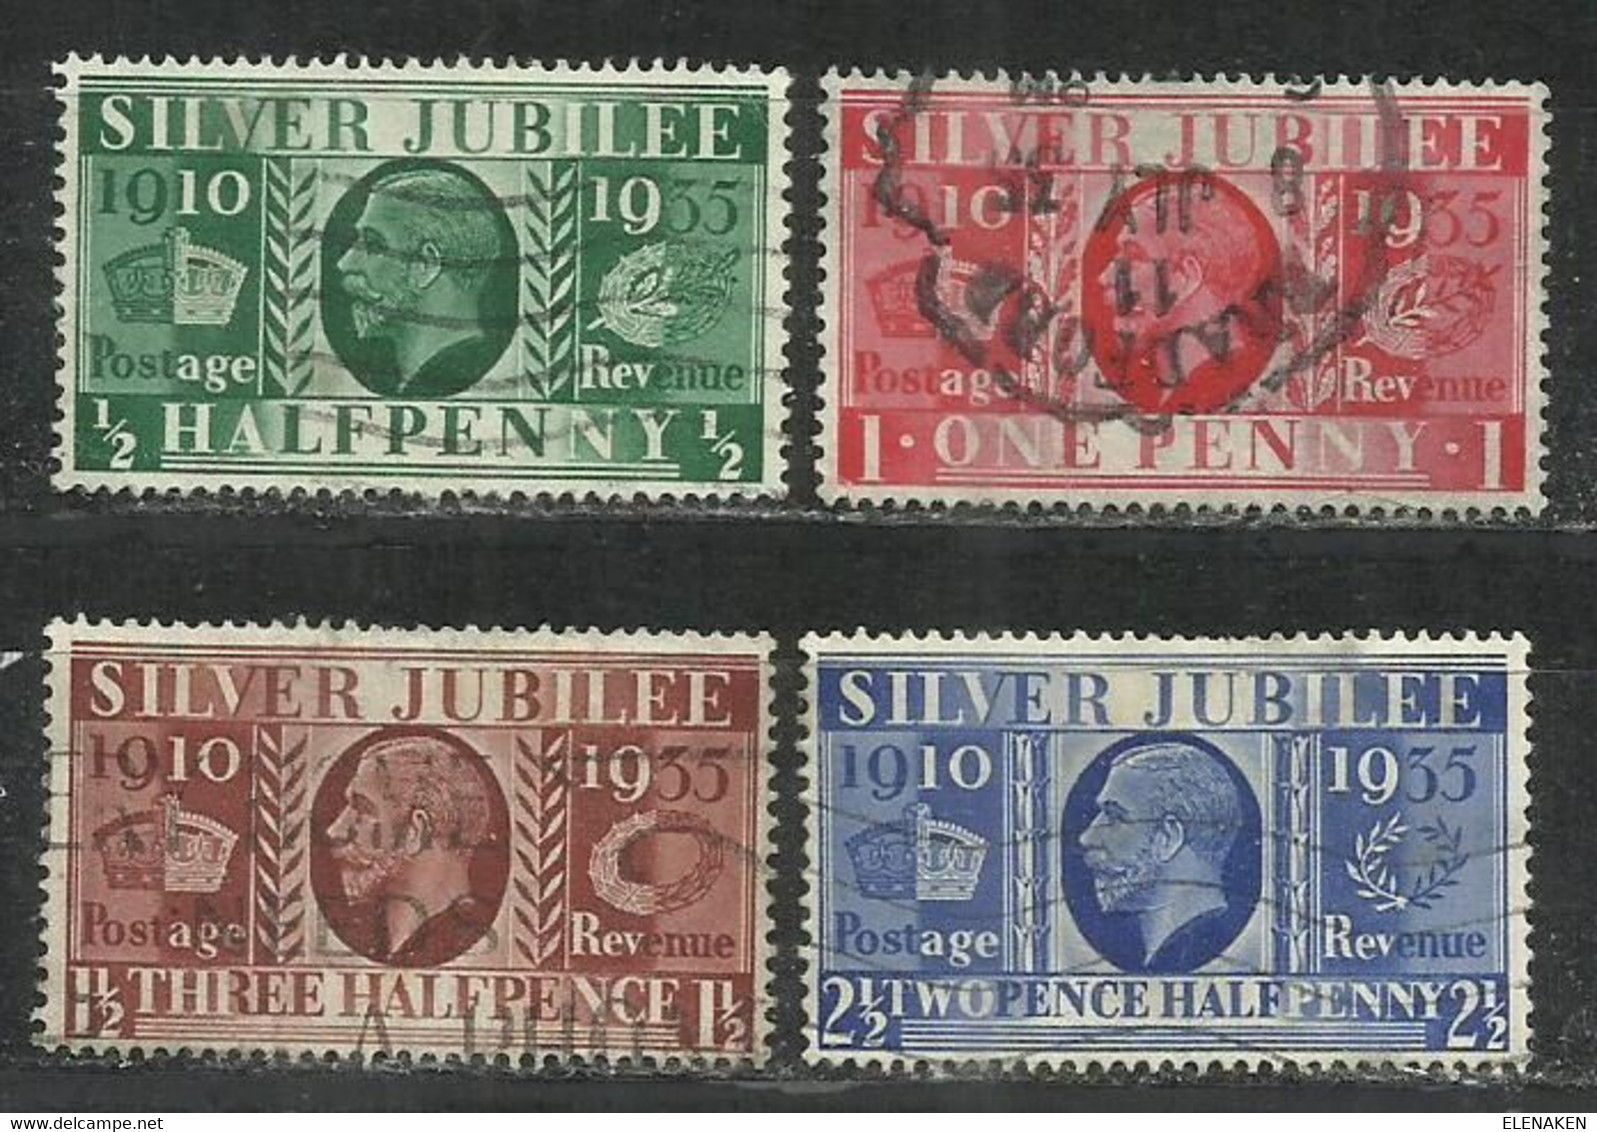 9348C-GRAN BRETAÑA SERIE COMPLETA 1935 Nº201/4 JORGE V.SILVER JUBILEE.USADOS,BUENA CALIDAD.CLASICOS - Used Stamps